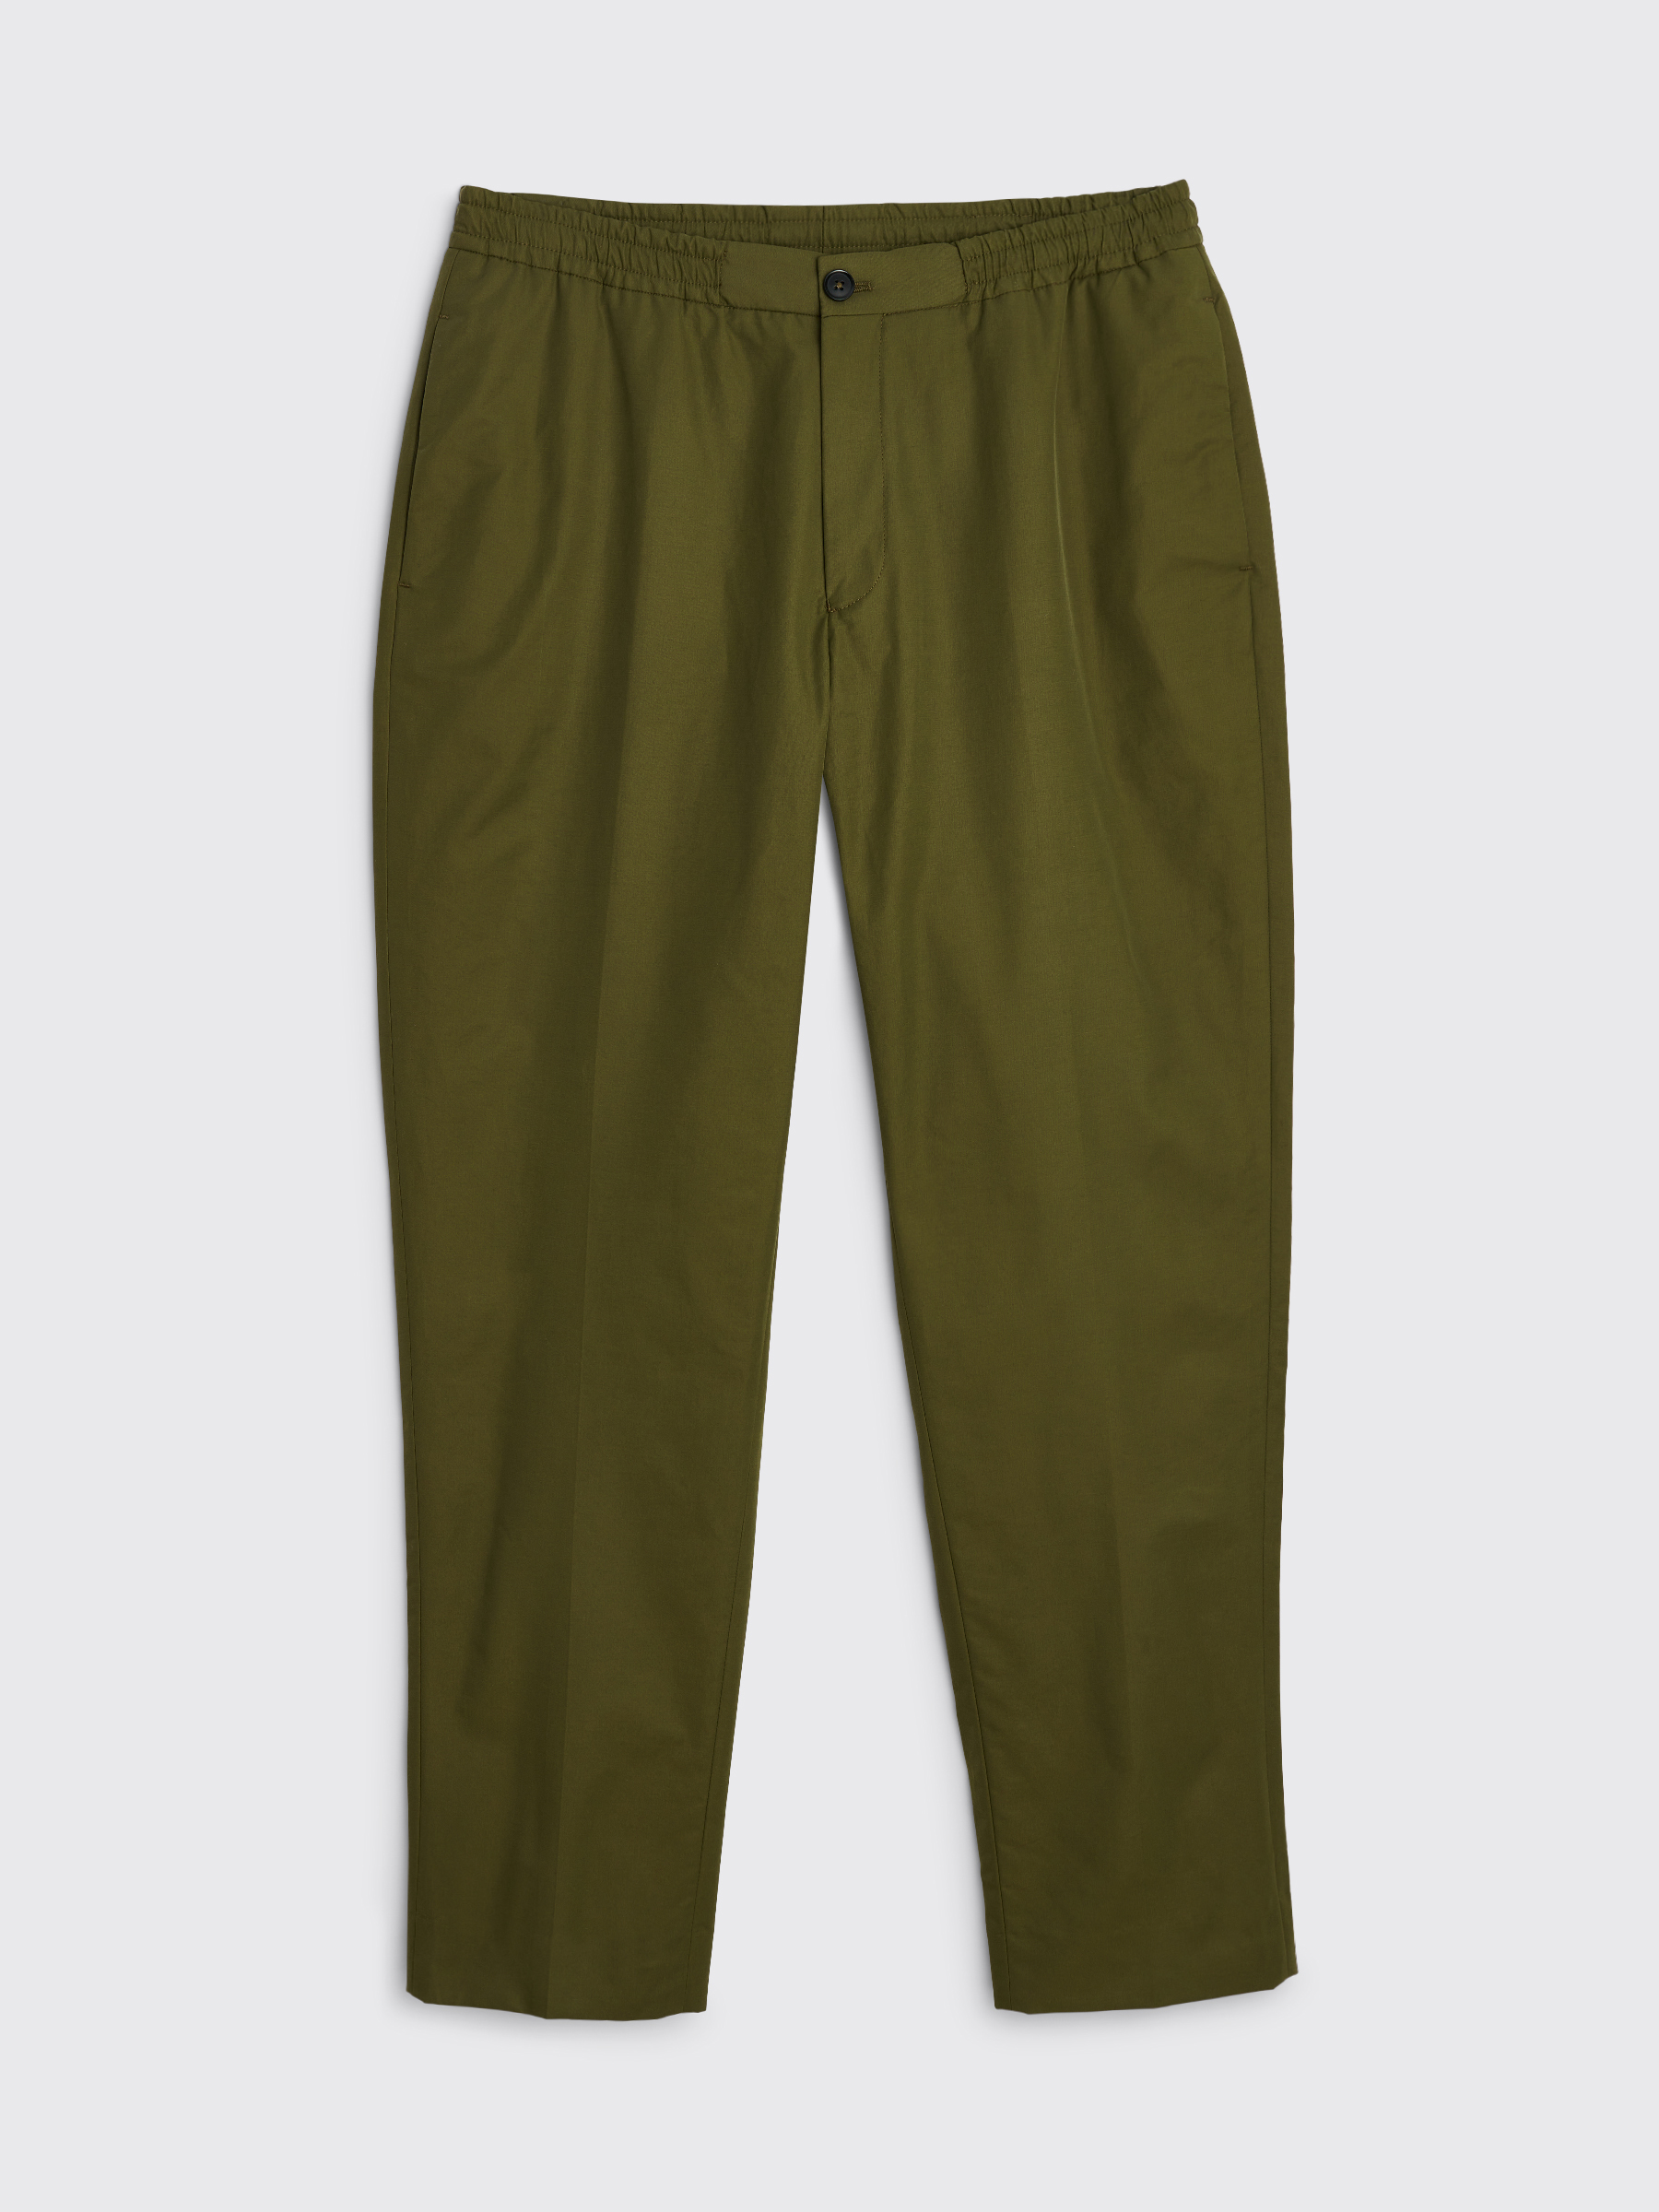 Green BIEN Pants Drawstring Sport Très - everywear TRÈS Bien